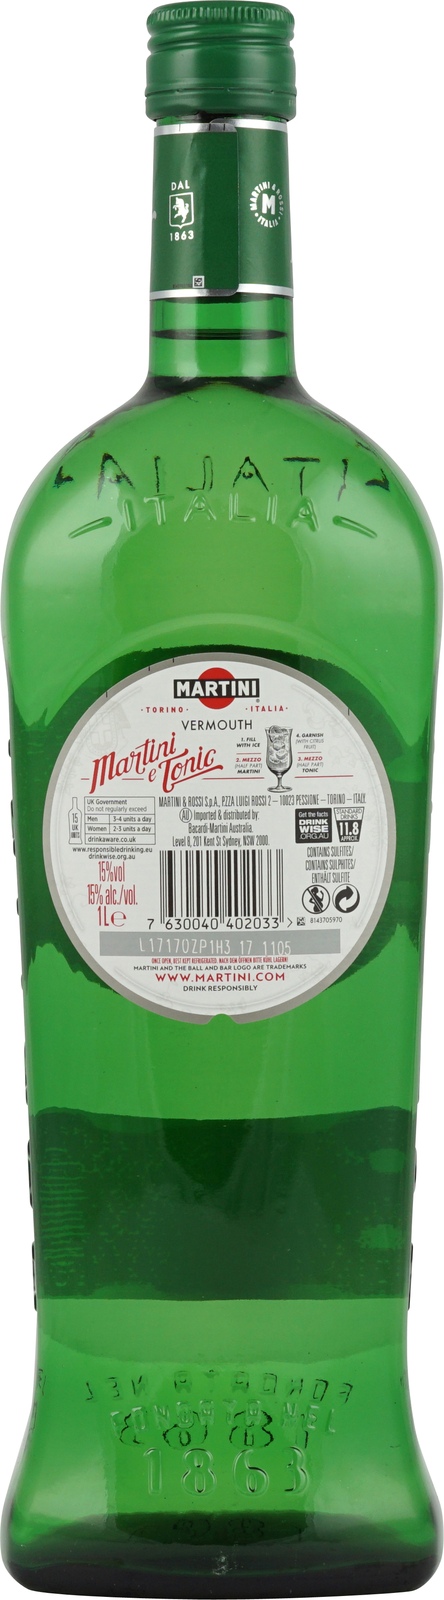 750 Martini Dry ml 15 Extra %